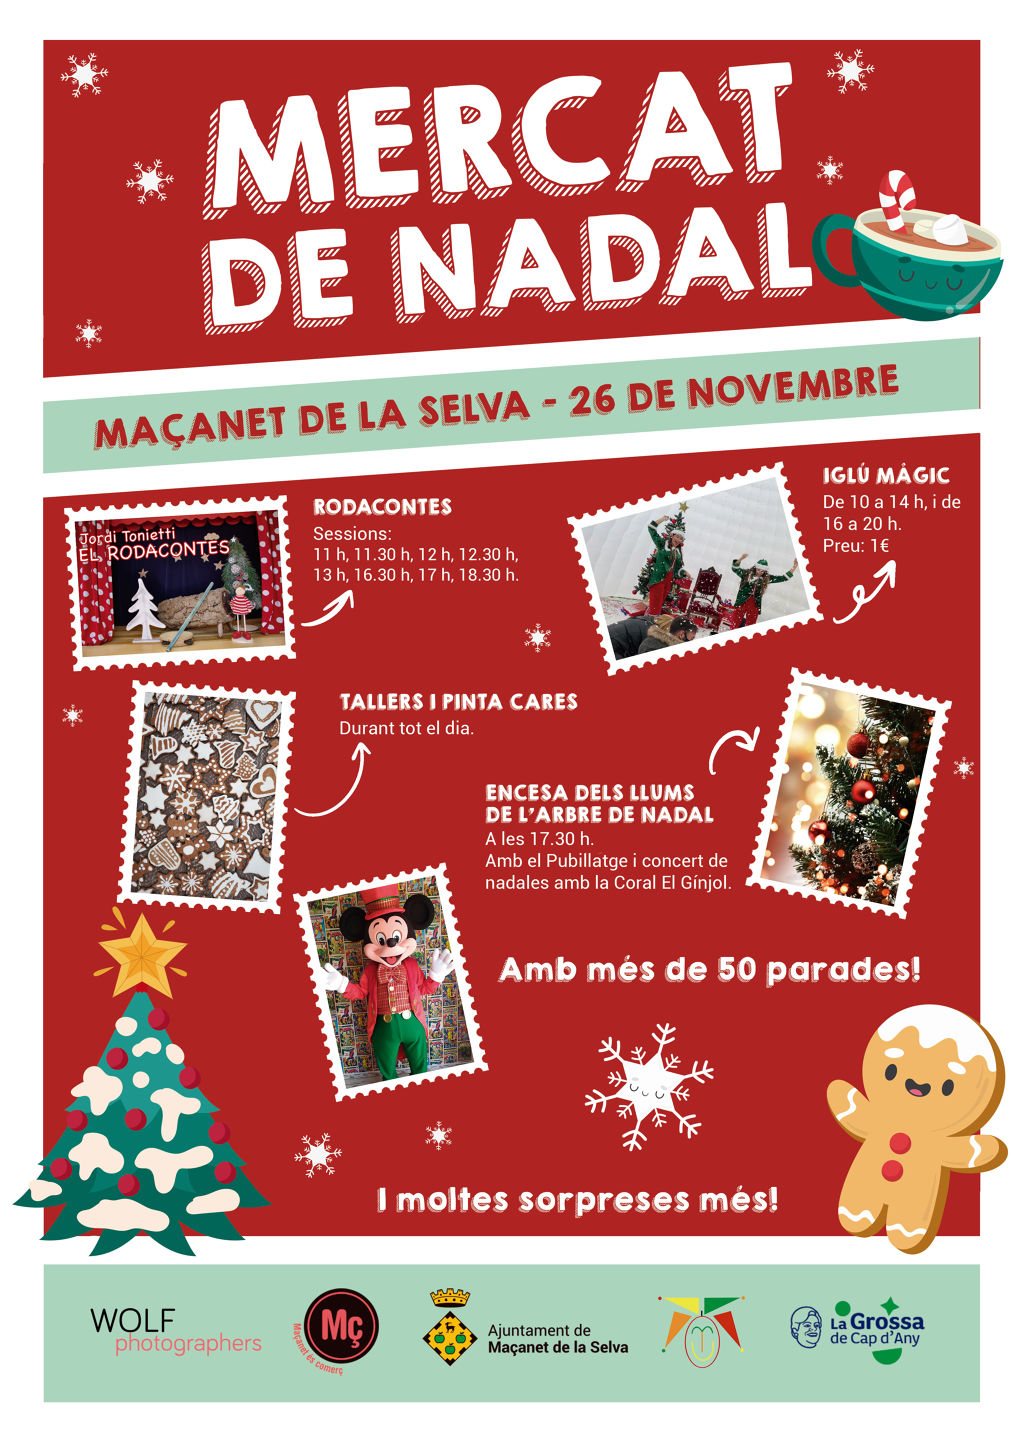 Mercat de Nadal - 04002-mercat-nadal-lidia.jpg